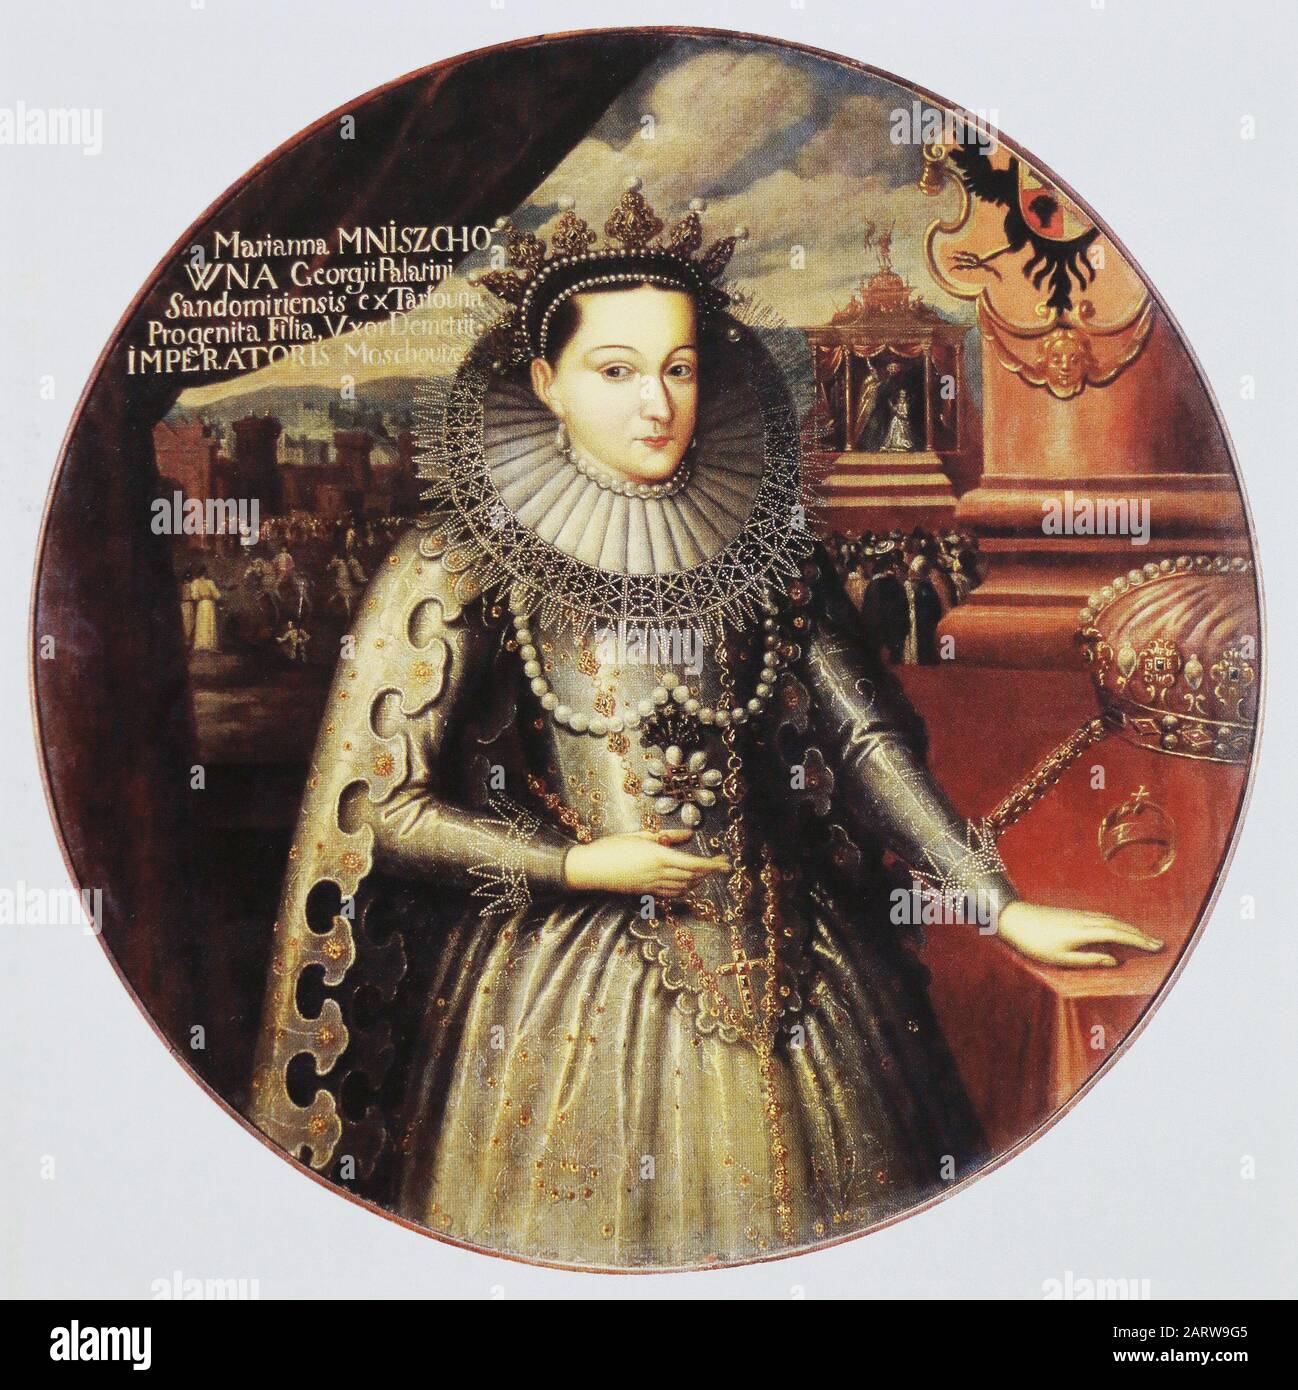 Marina Mniszek (Mniszech). Painting of the 17th century. Stock Photo